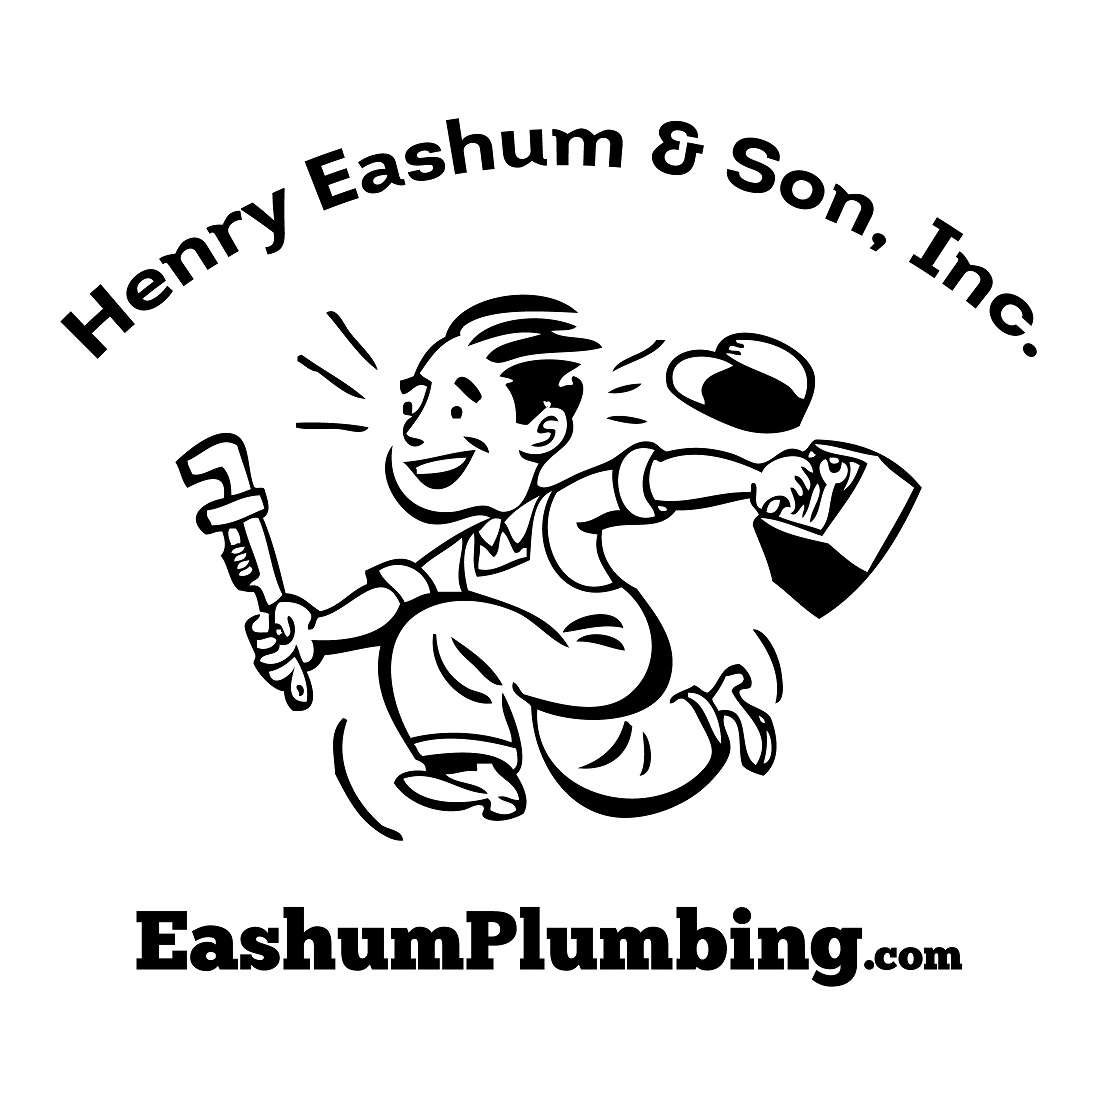 Henry Eashum & Son, Inc. Logo